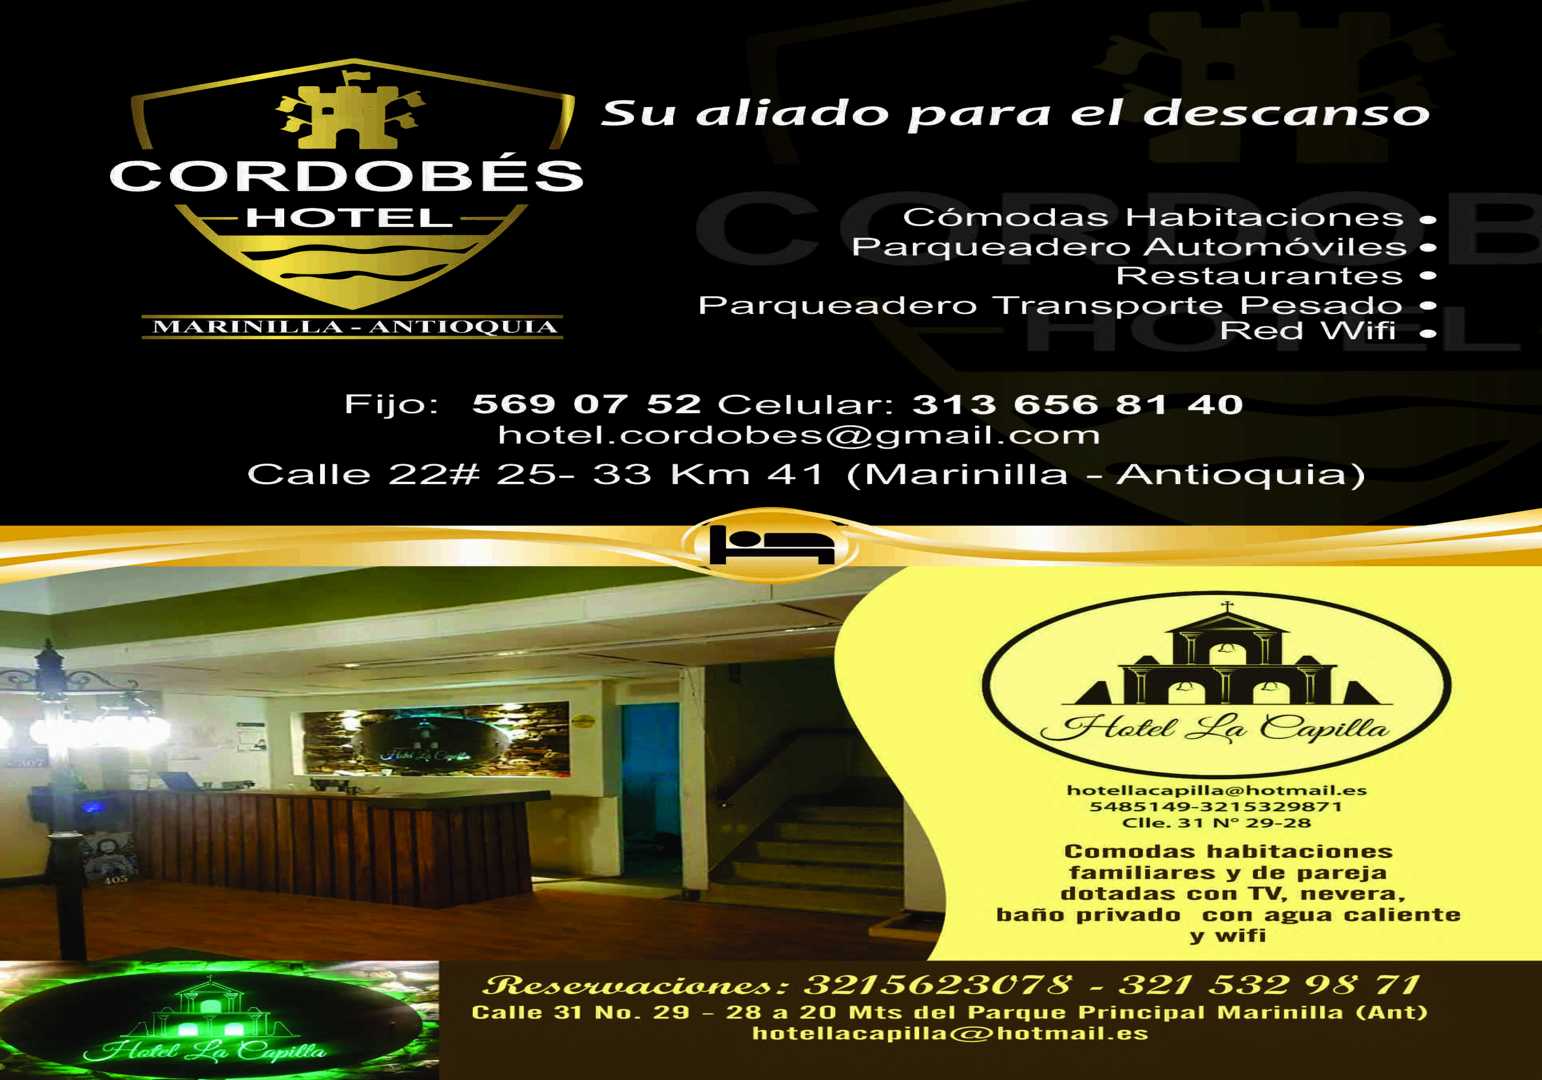 Cordobés Hotel - Marinilla Antioquia